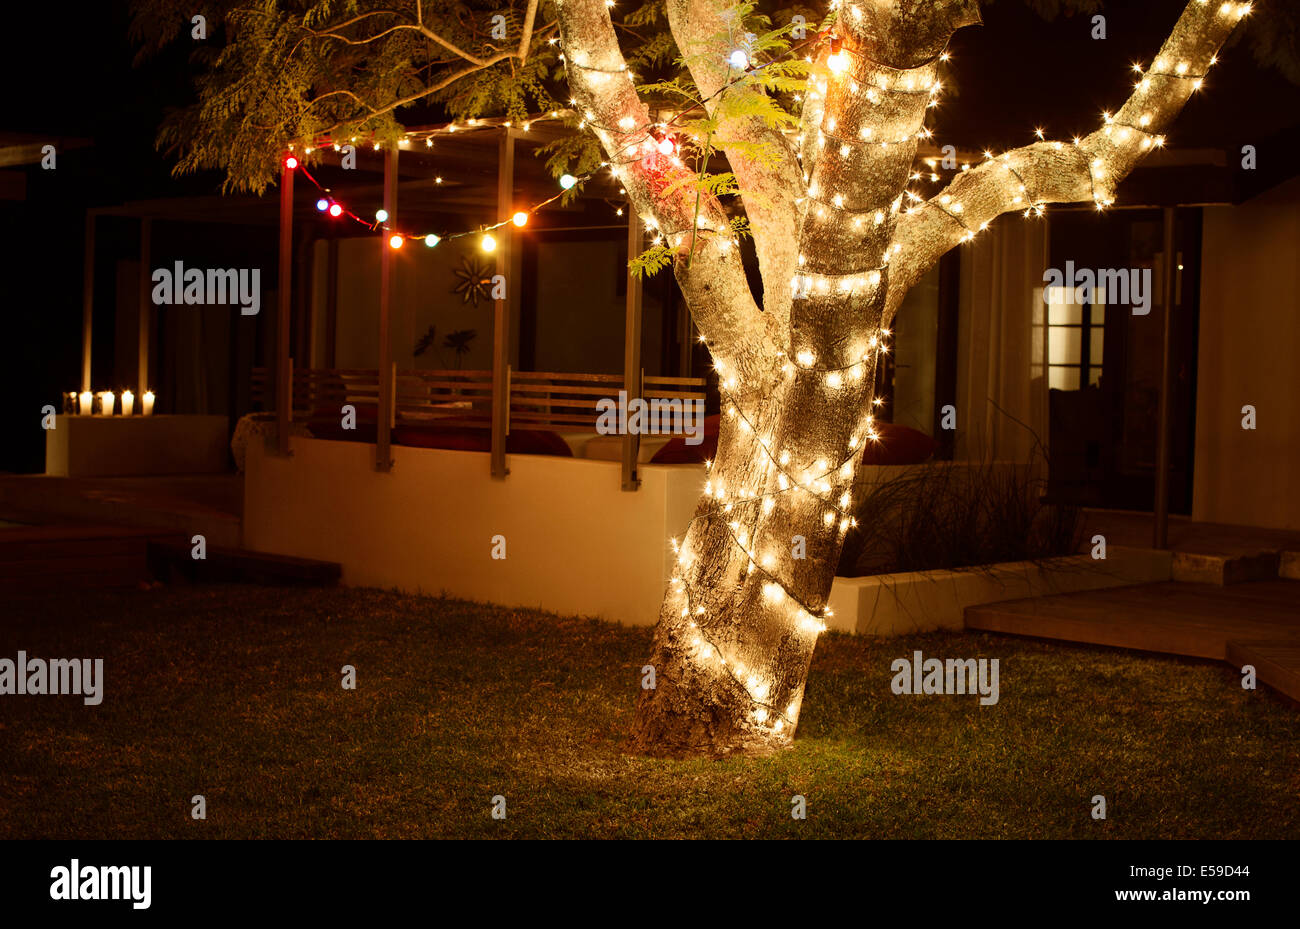 Tree lit up at night in backyard Stock Photo